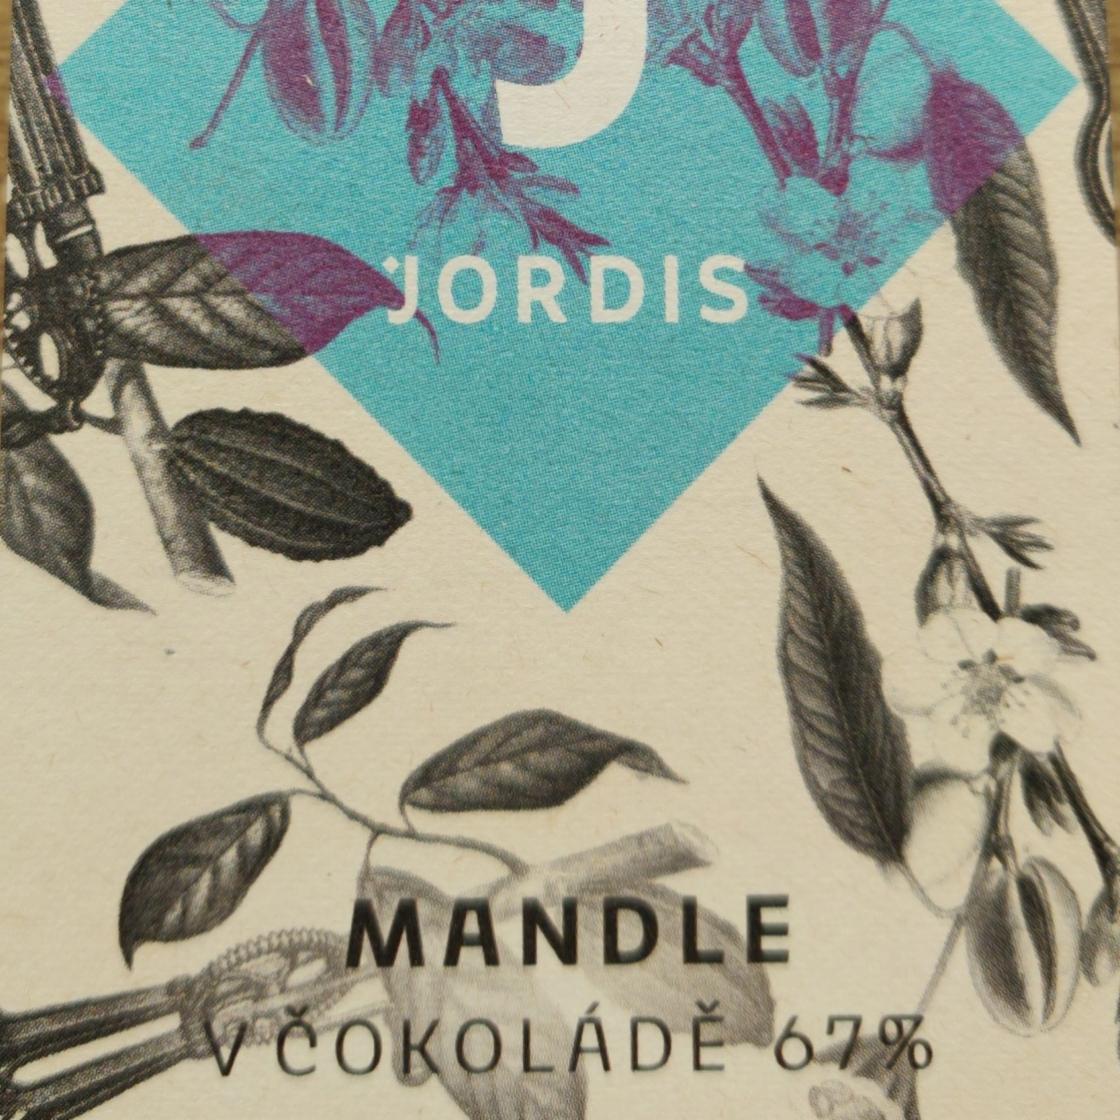 Fotografie - Mandle v čokoládě 67% Jordis